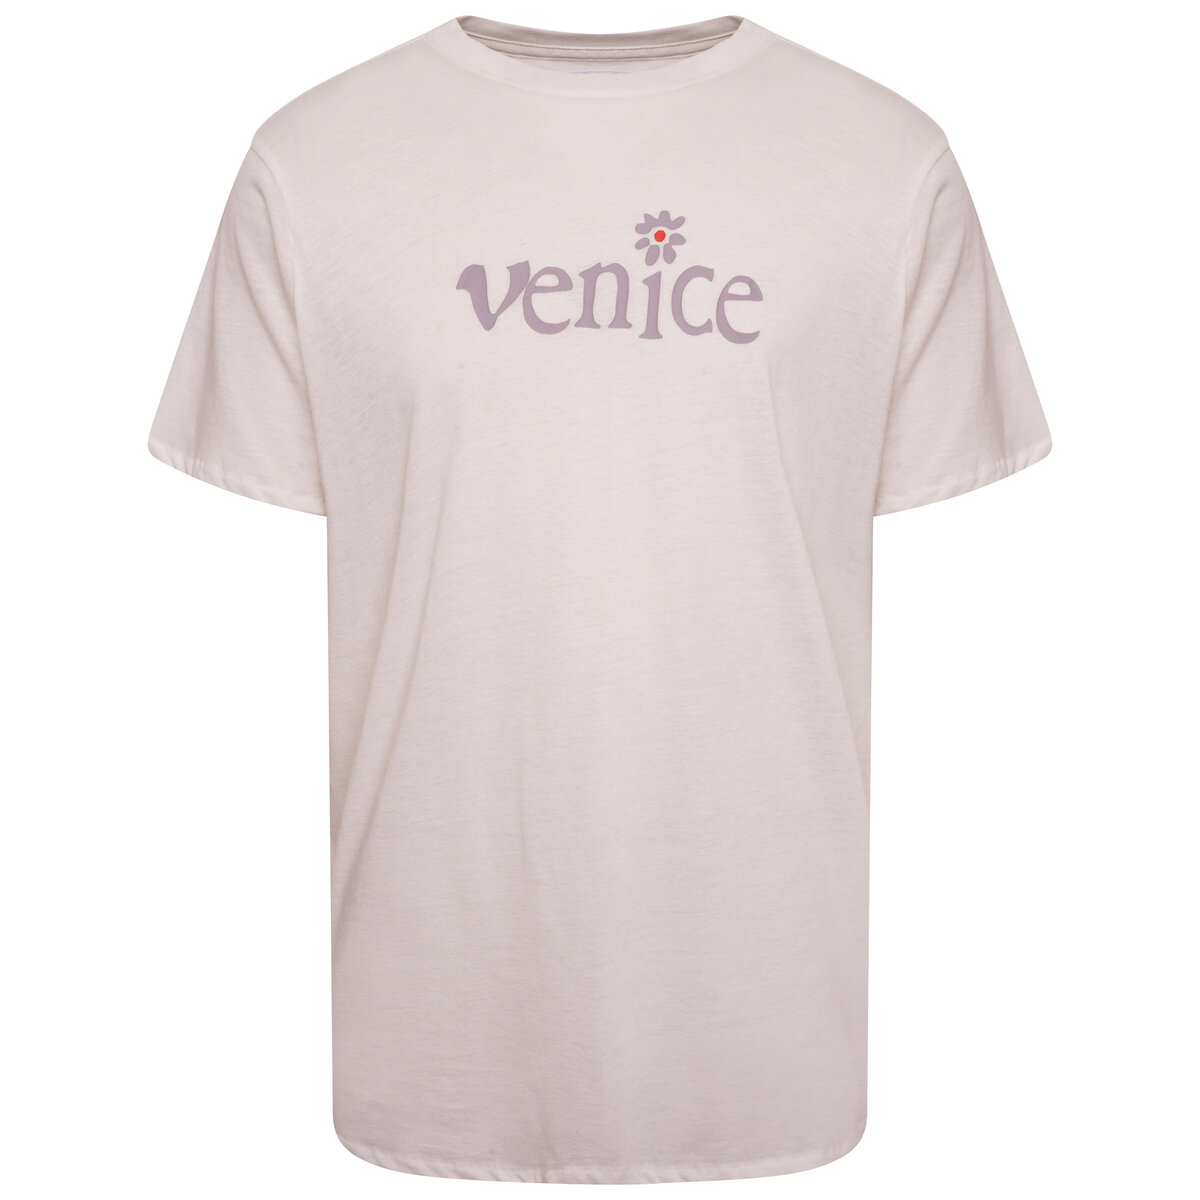 Venice - Be Nice T-shirt S Beige